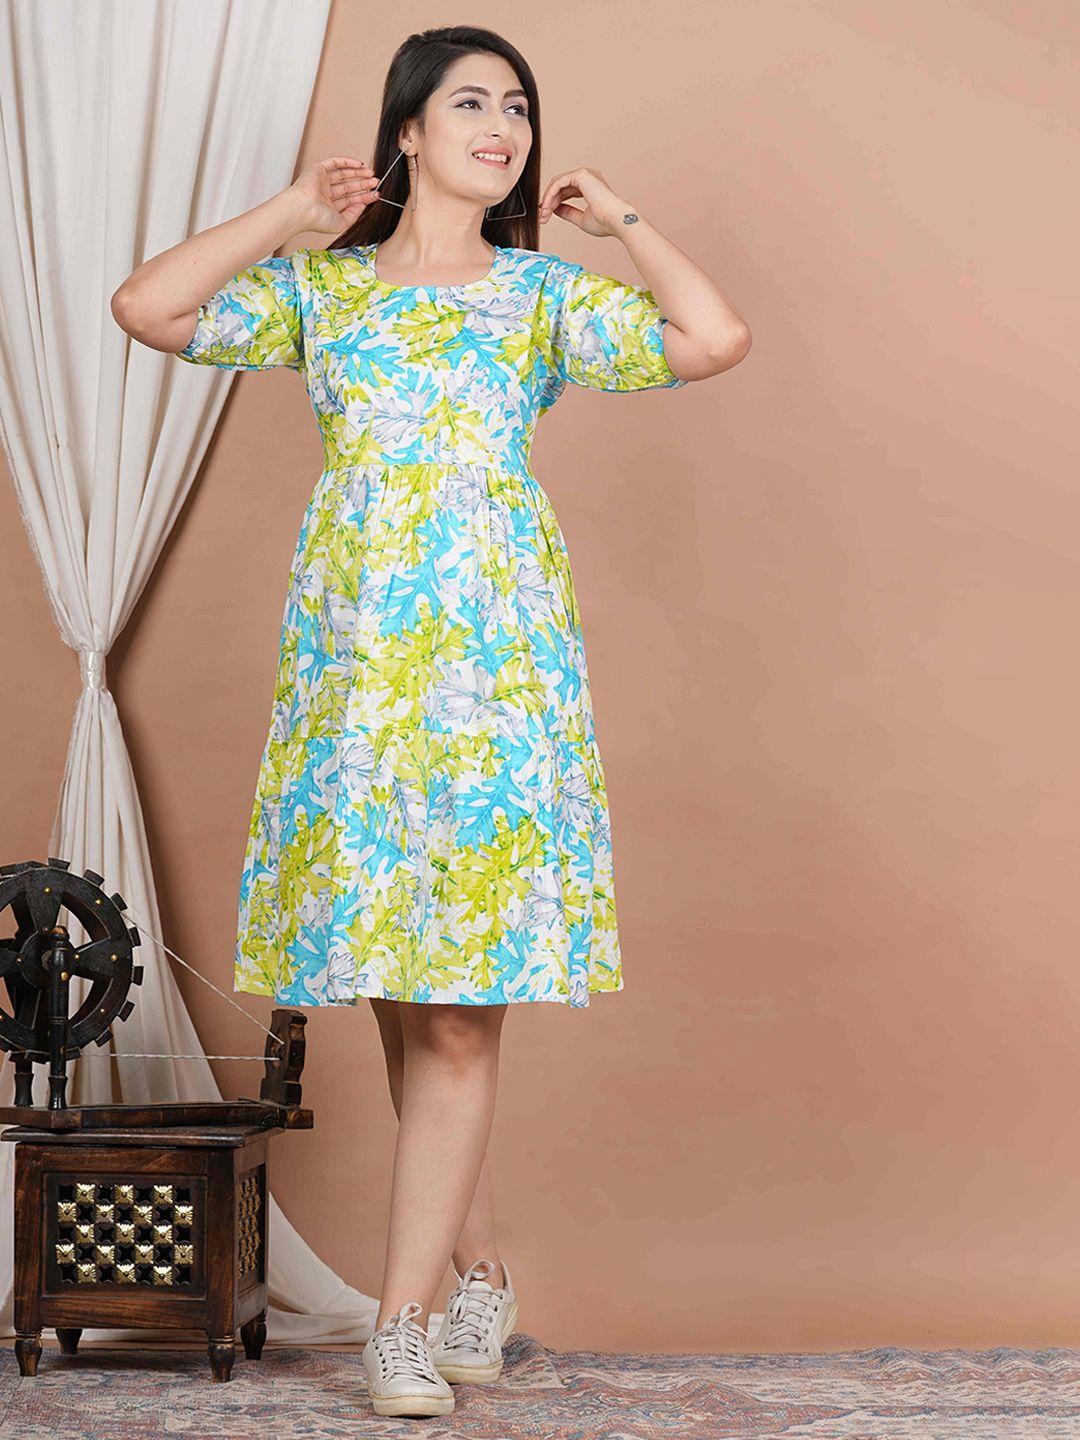 unibliss floral printed cotton a-line dress